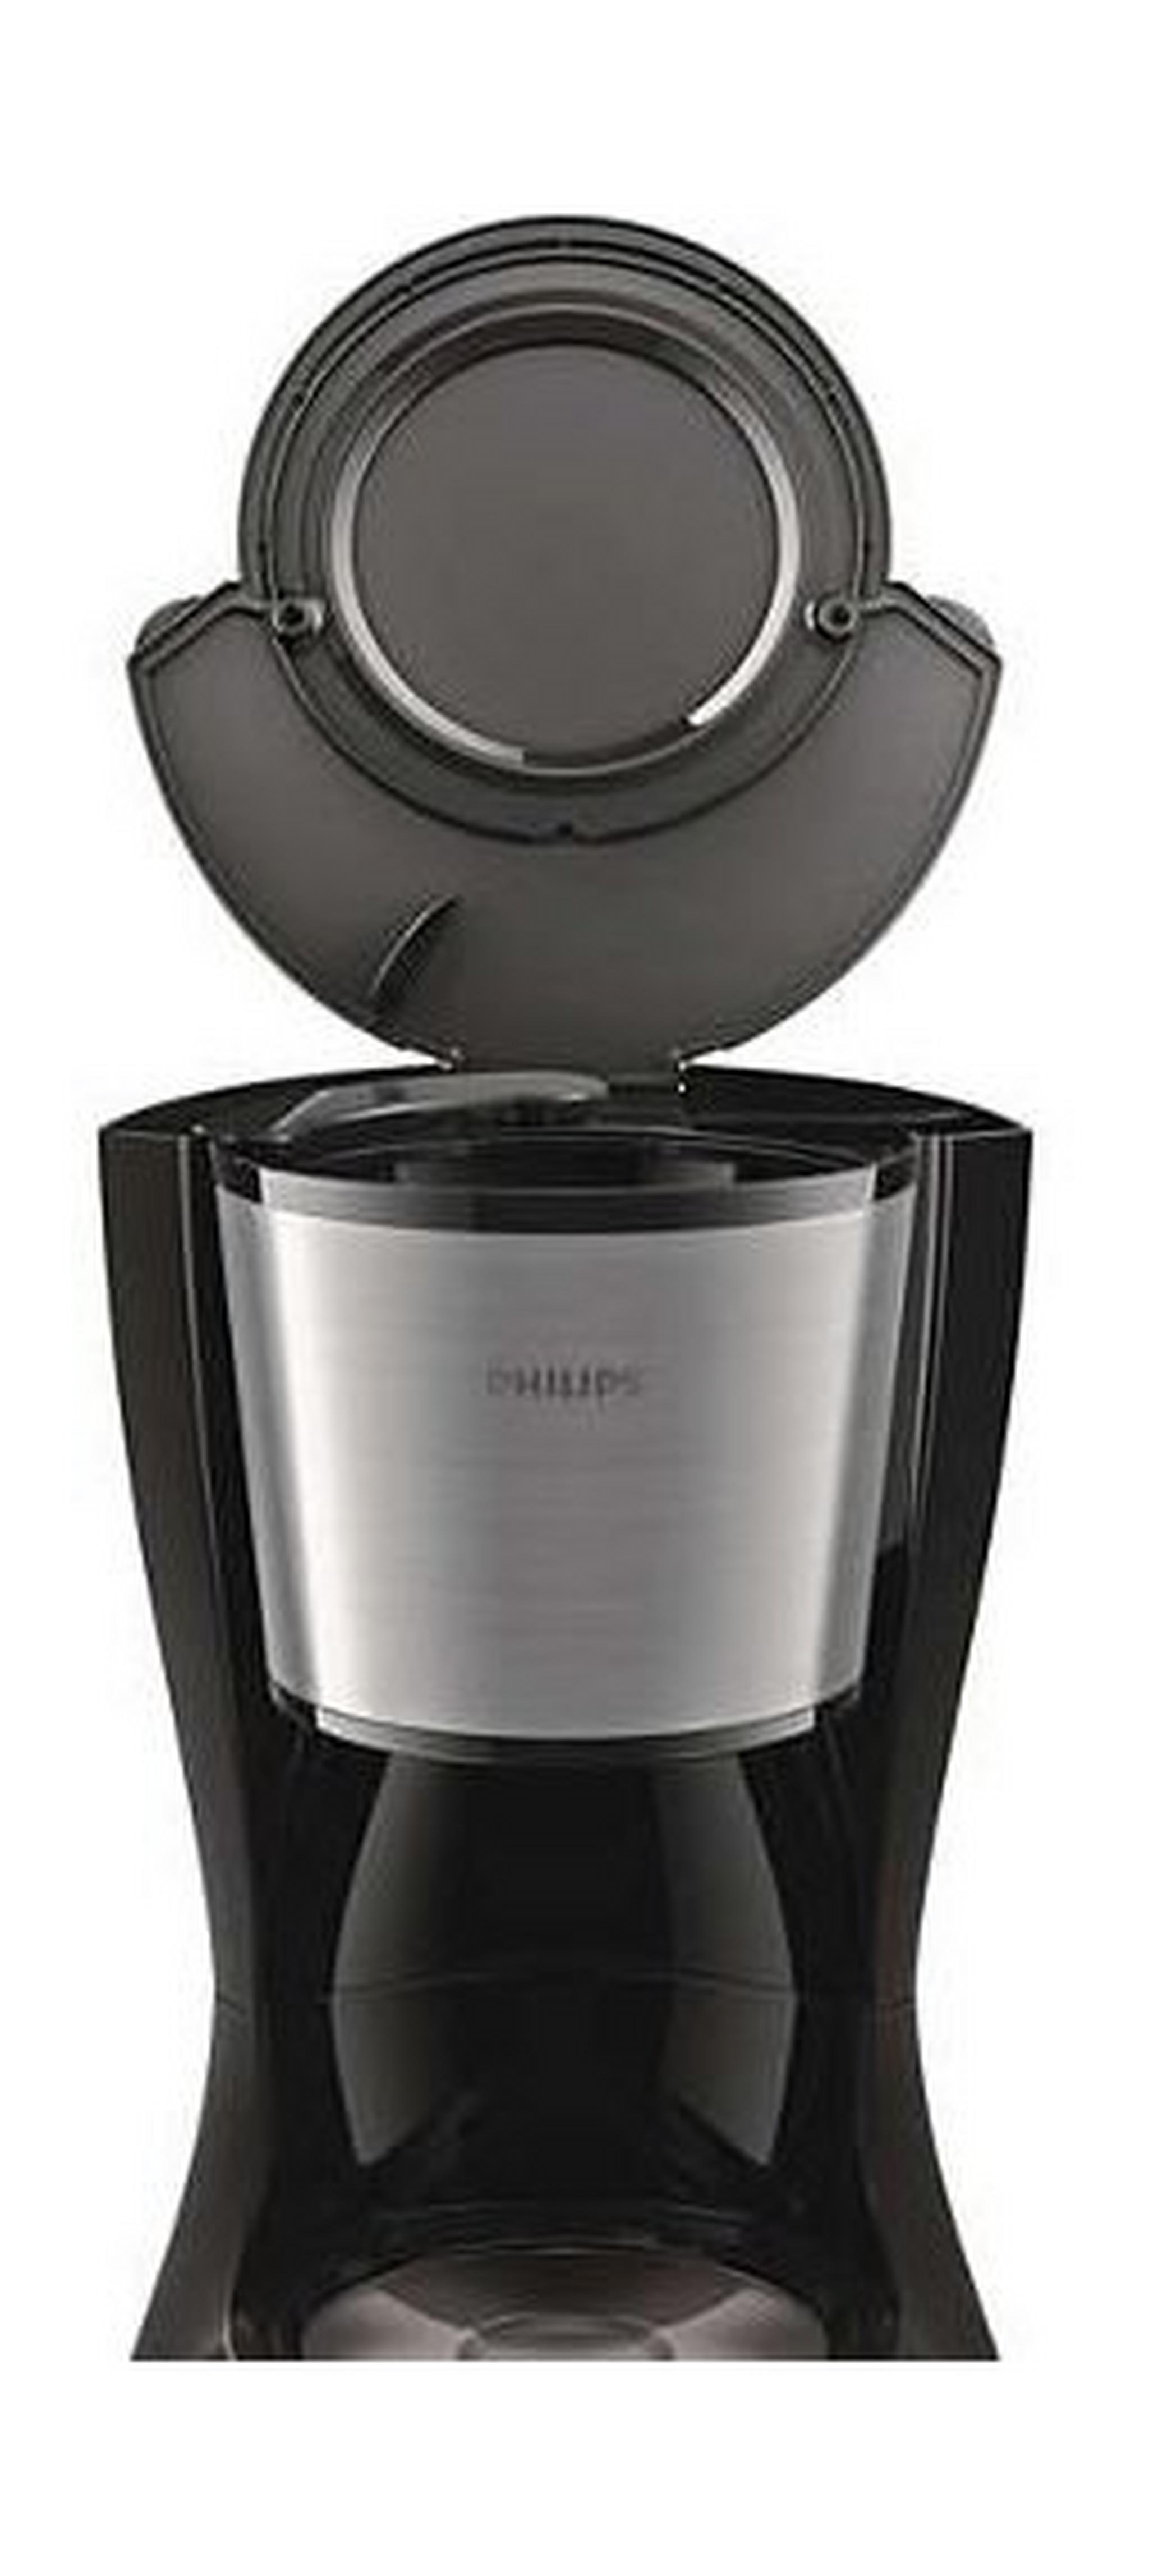 Philips  HD7457/20 1000W Coffee Maker - Black